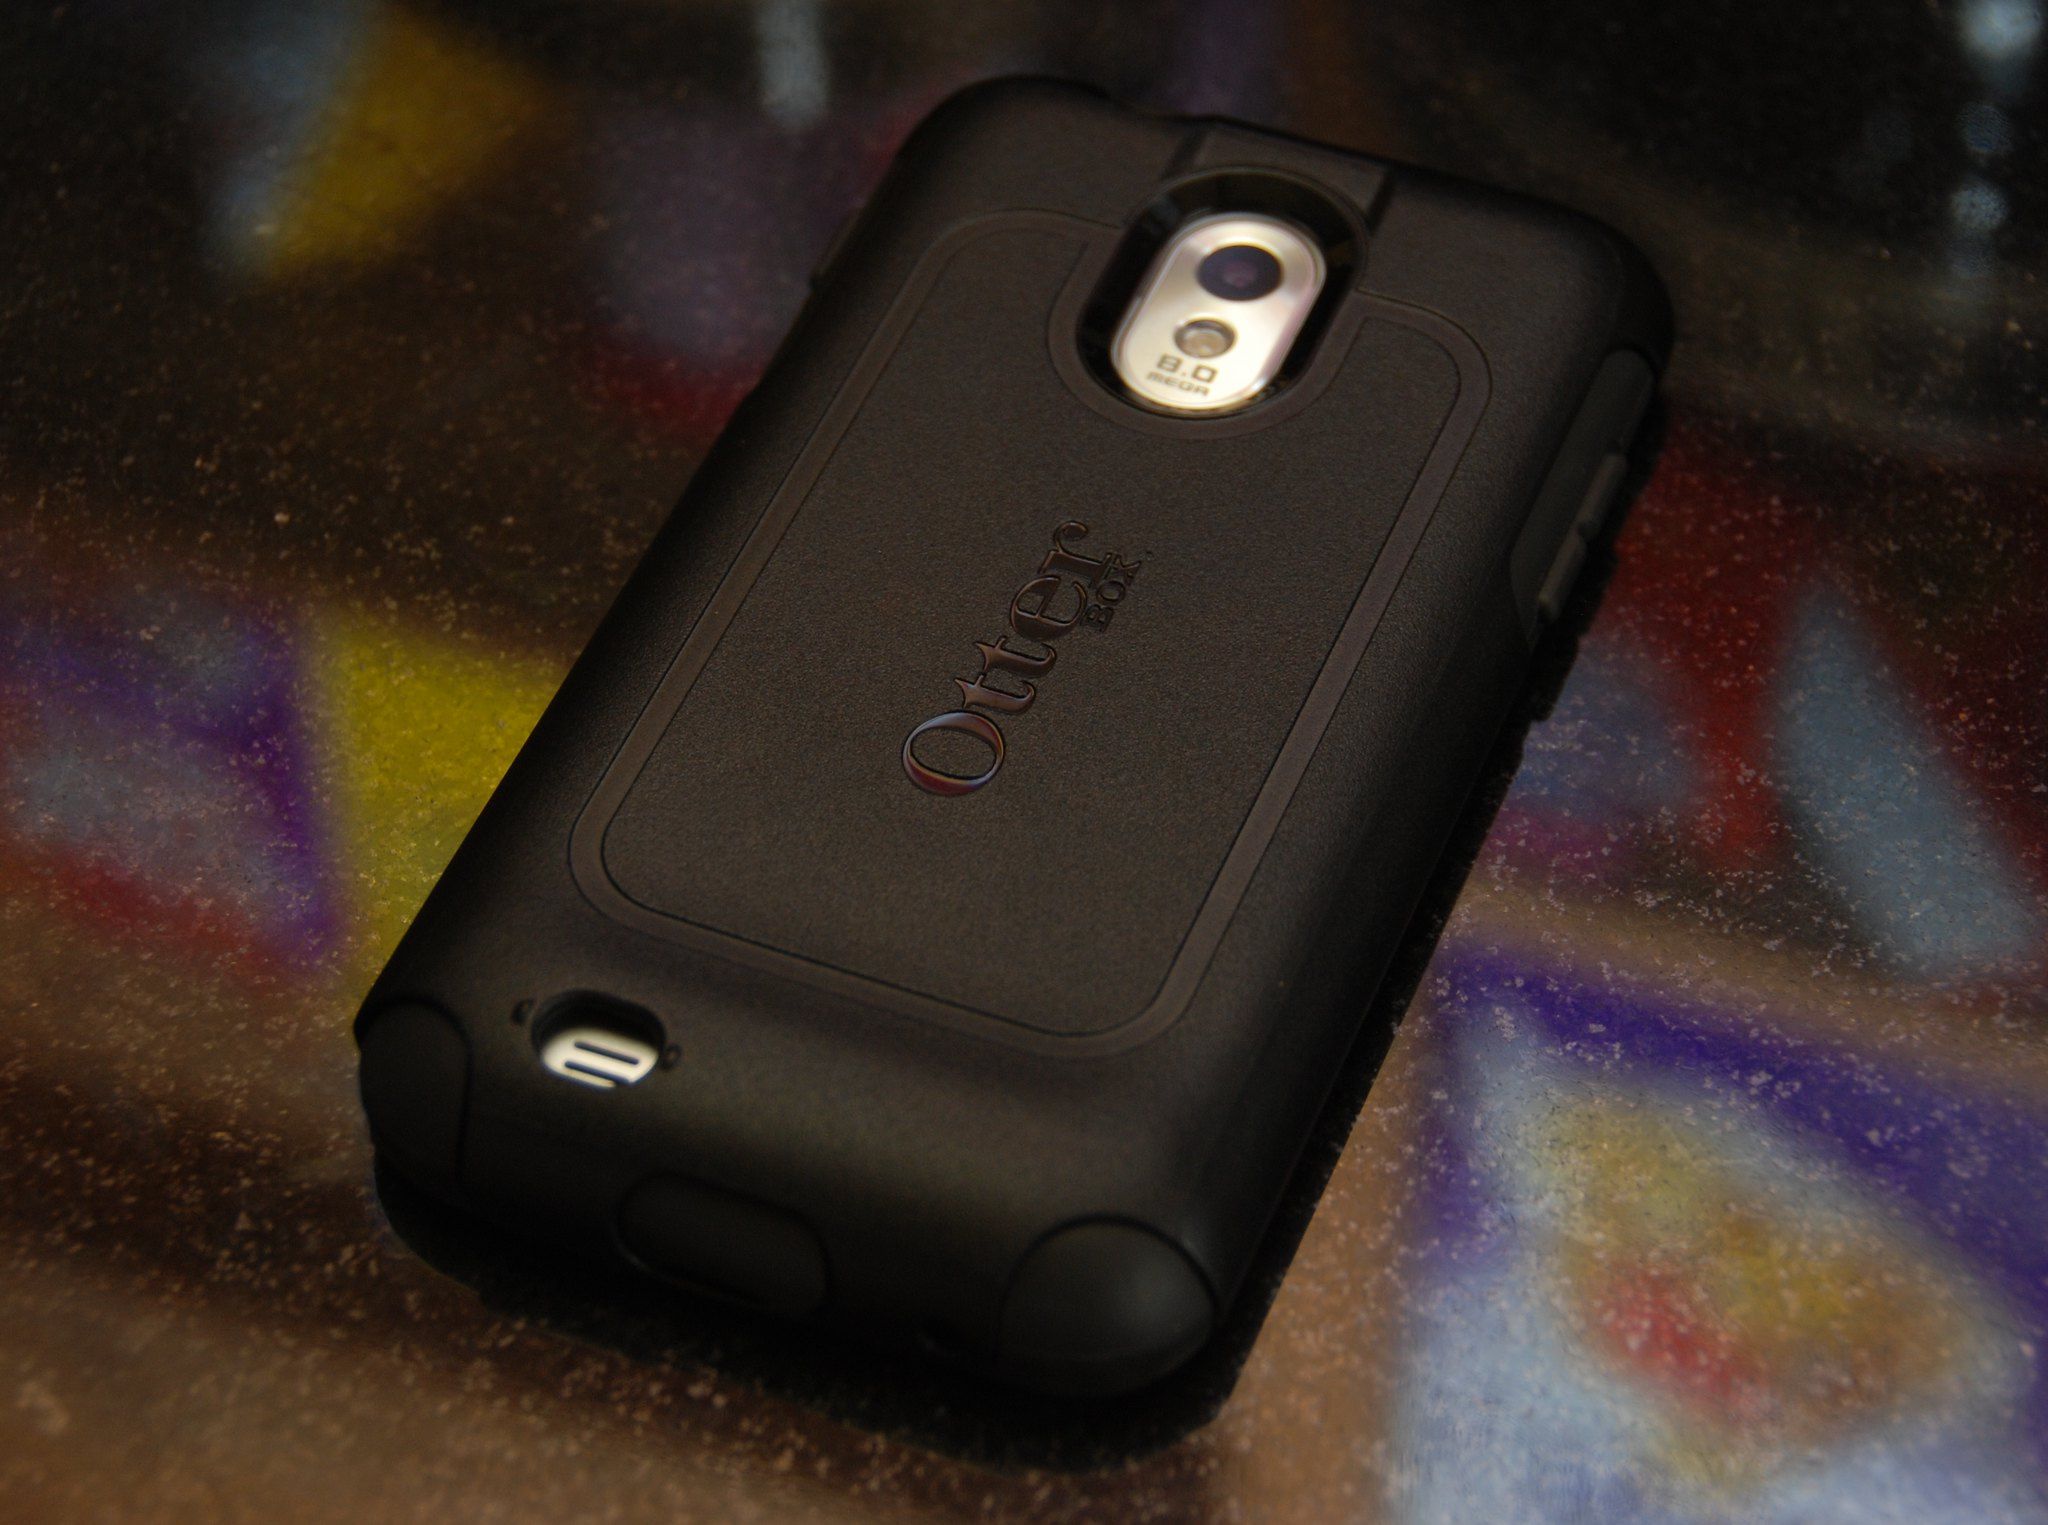 a black Otterbox case on a Samsung Galaxy phone